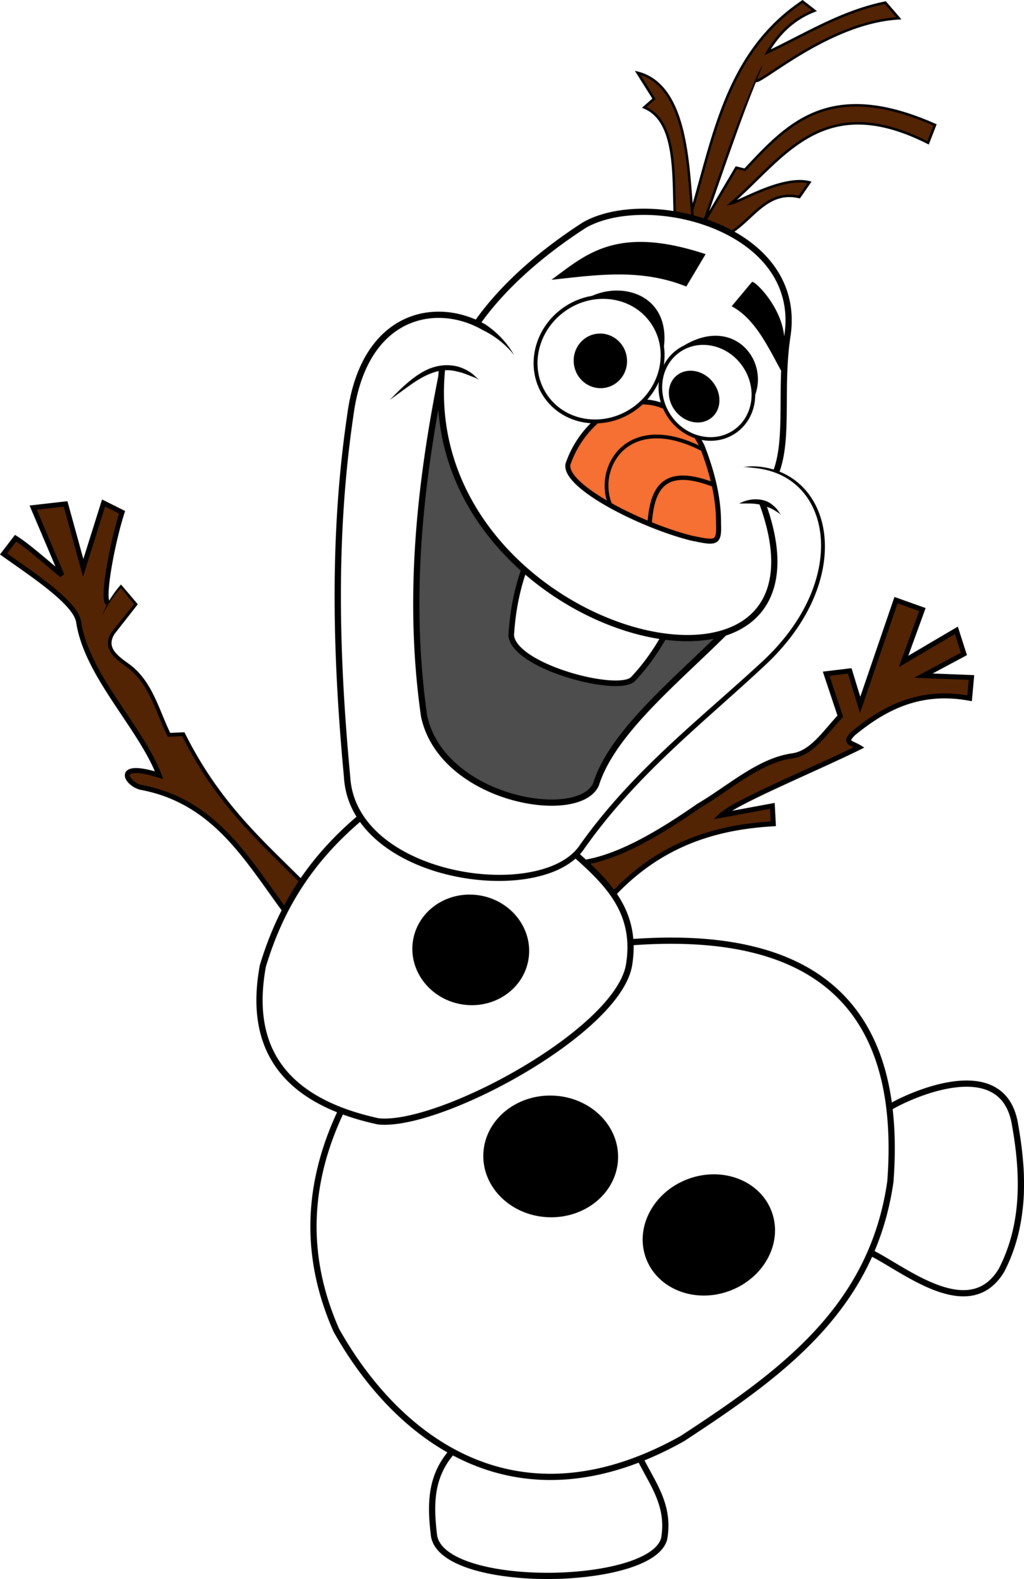 Olaf by shadow unicorn. Clipart snowflake cartoon